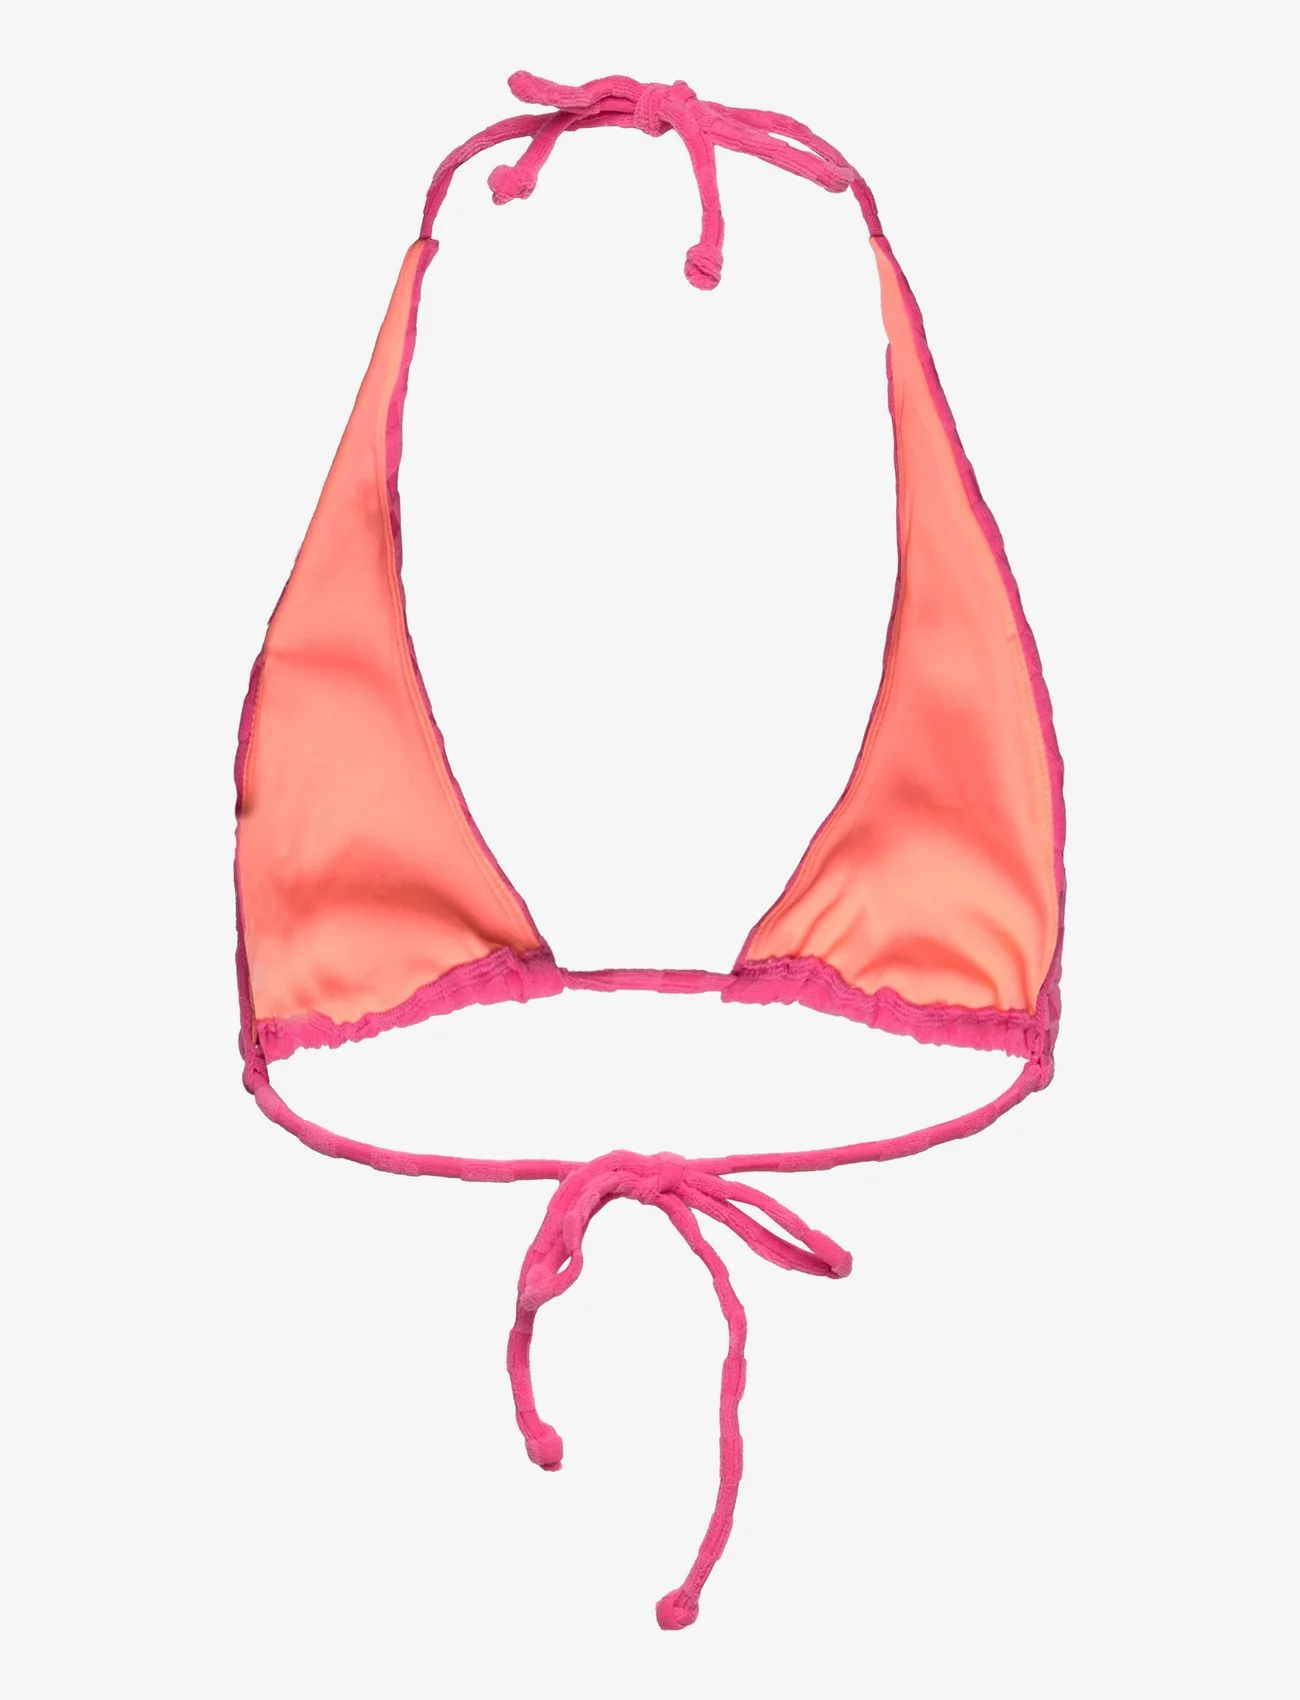 Speedo - TERRY CONVERTIBLE TRIANGLE TOP - triangle bikinis - pink - 1